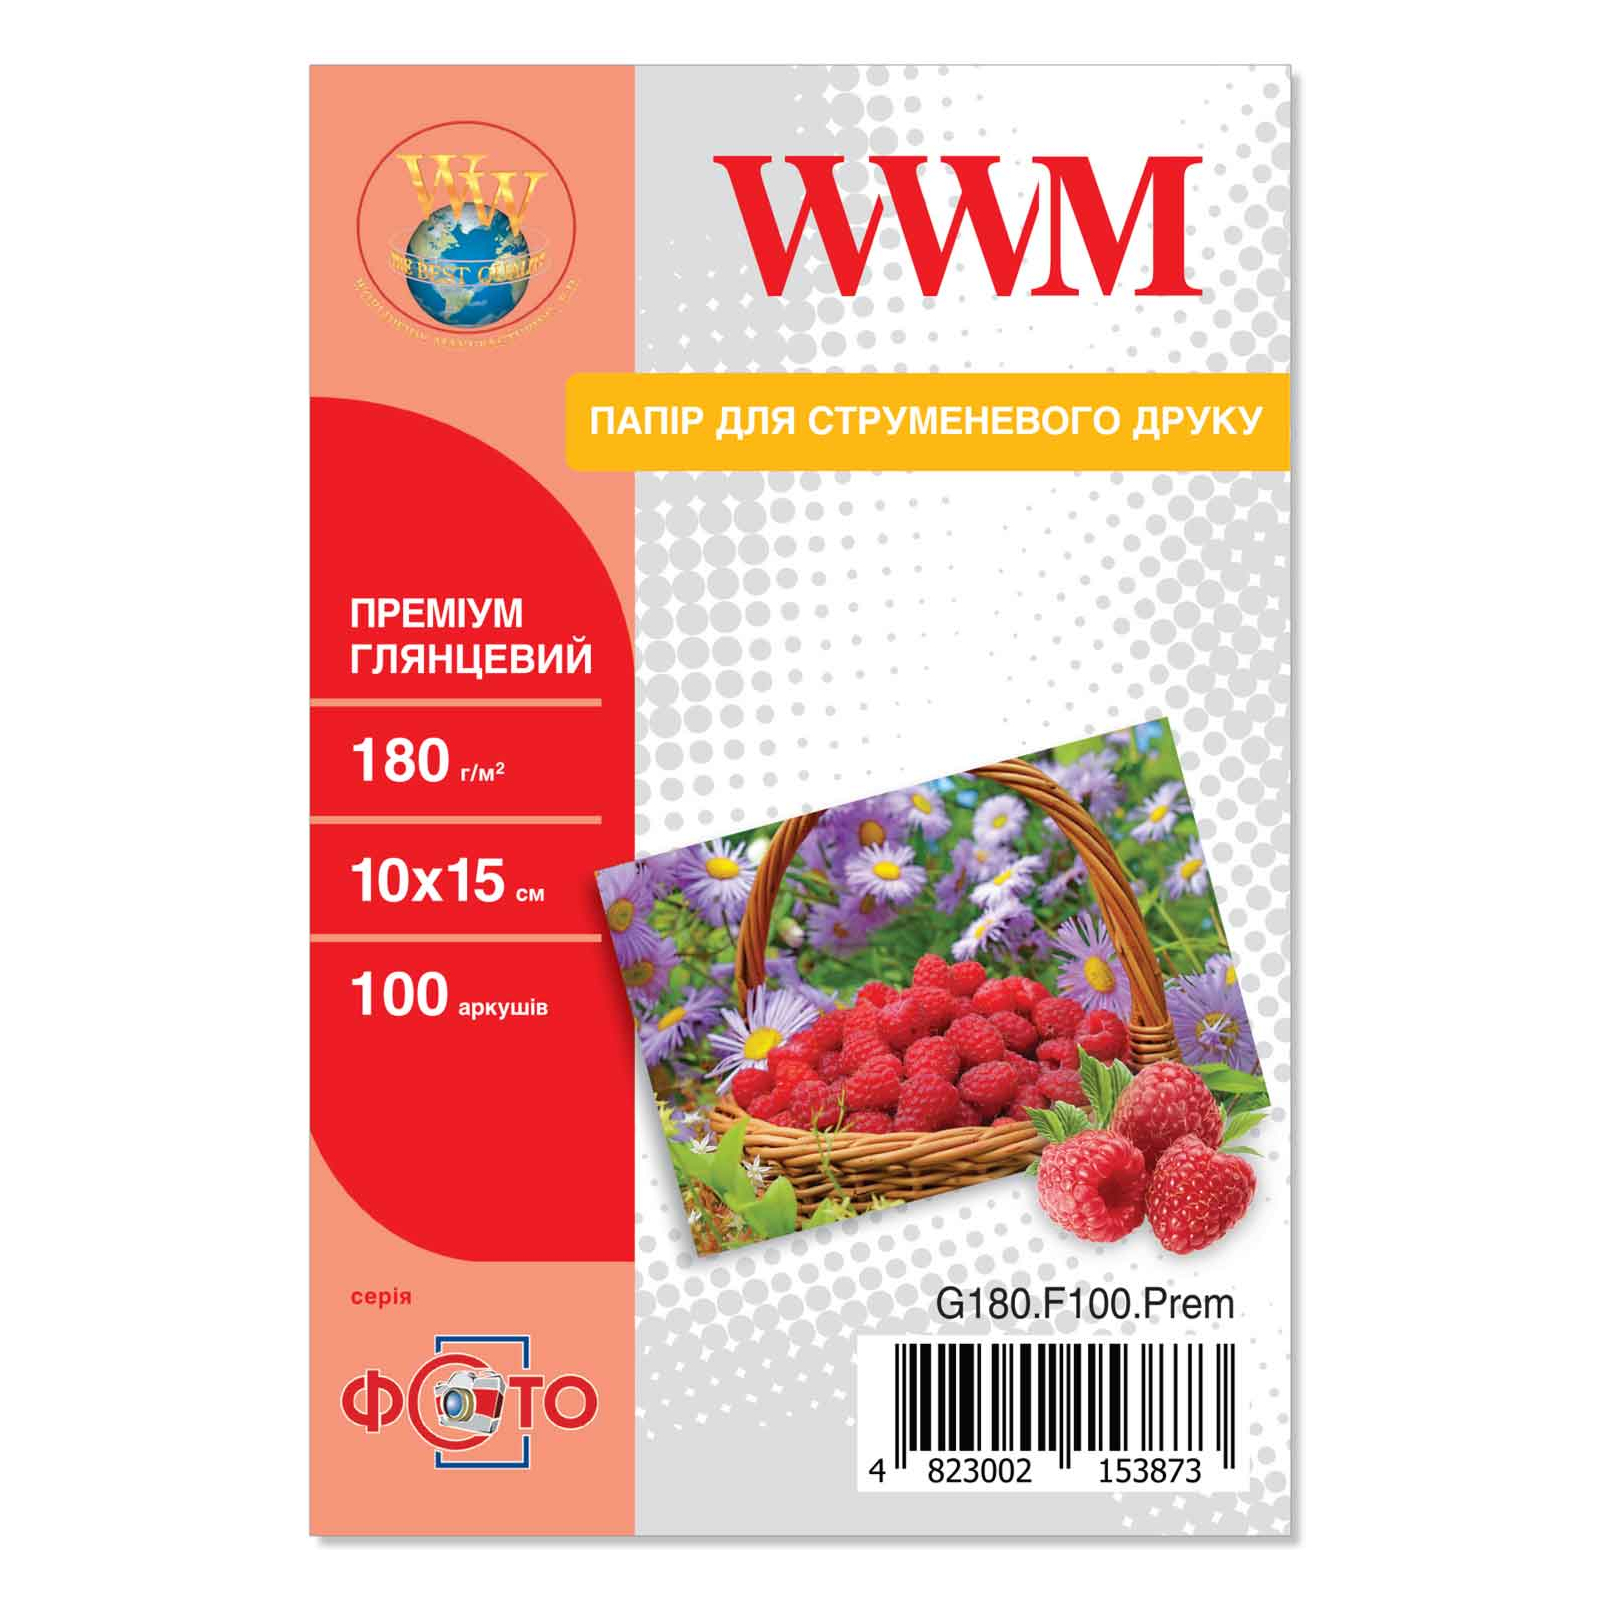 Фотобумага 10x15 Premium WWM (G180.F100.Prem)